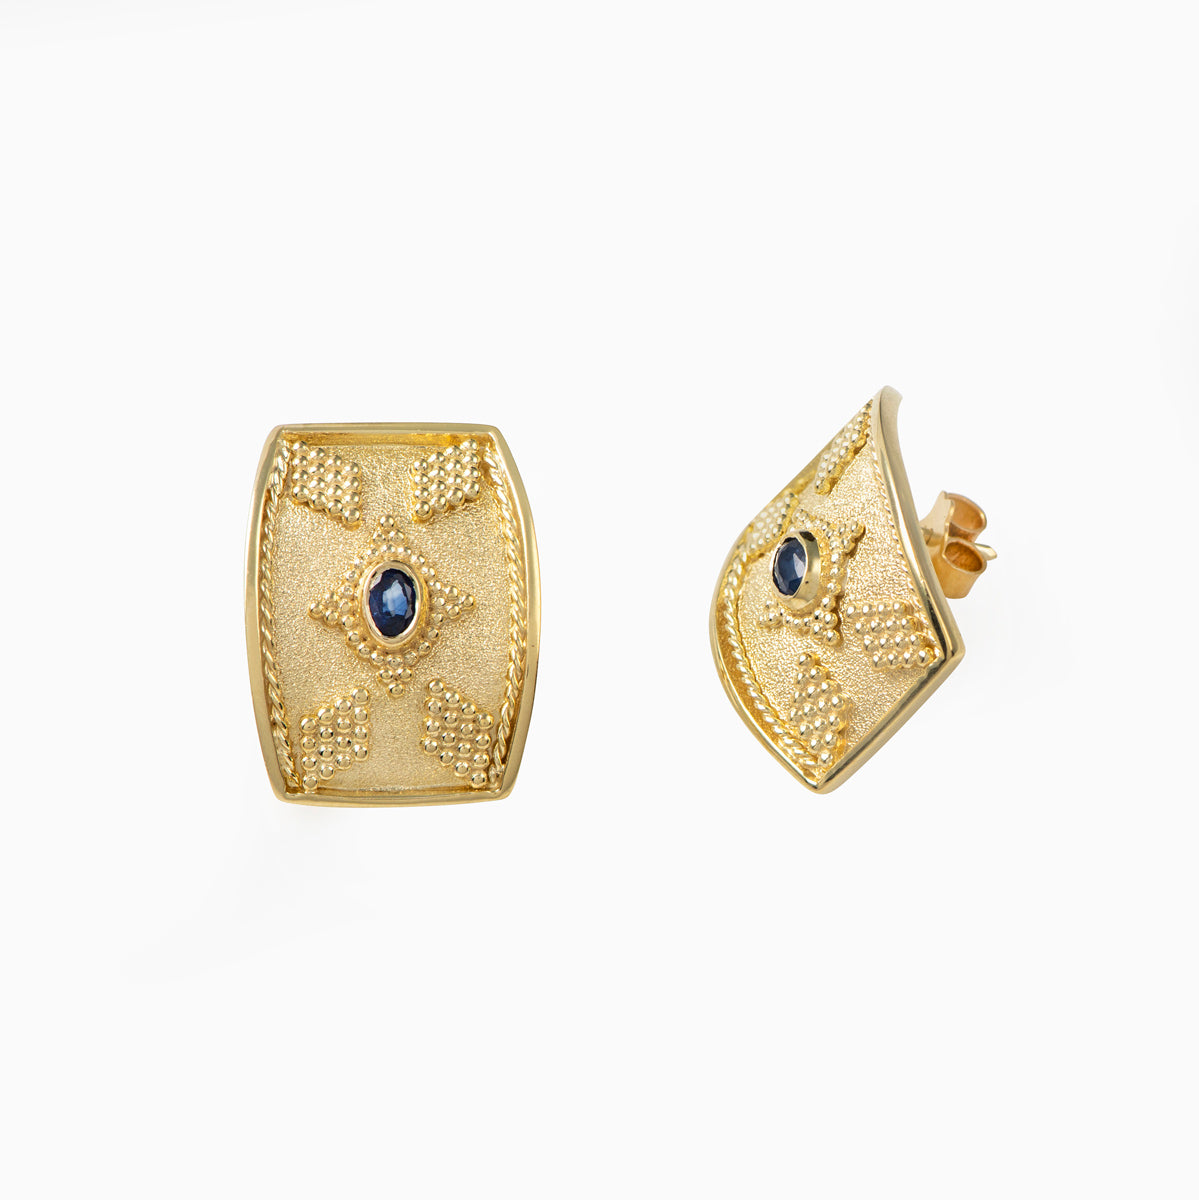 The ''Princess'' Byzantine Earrings